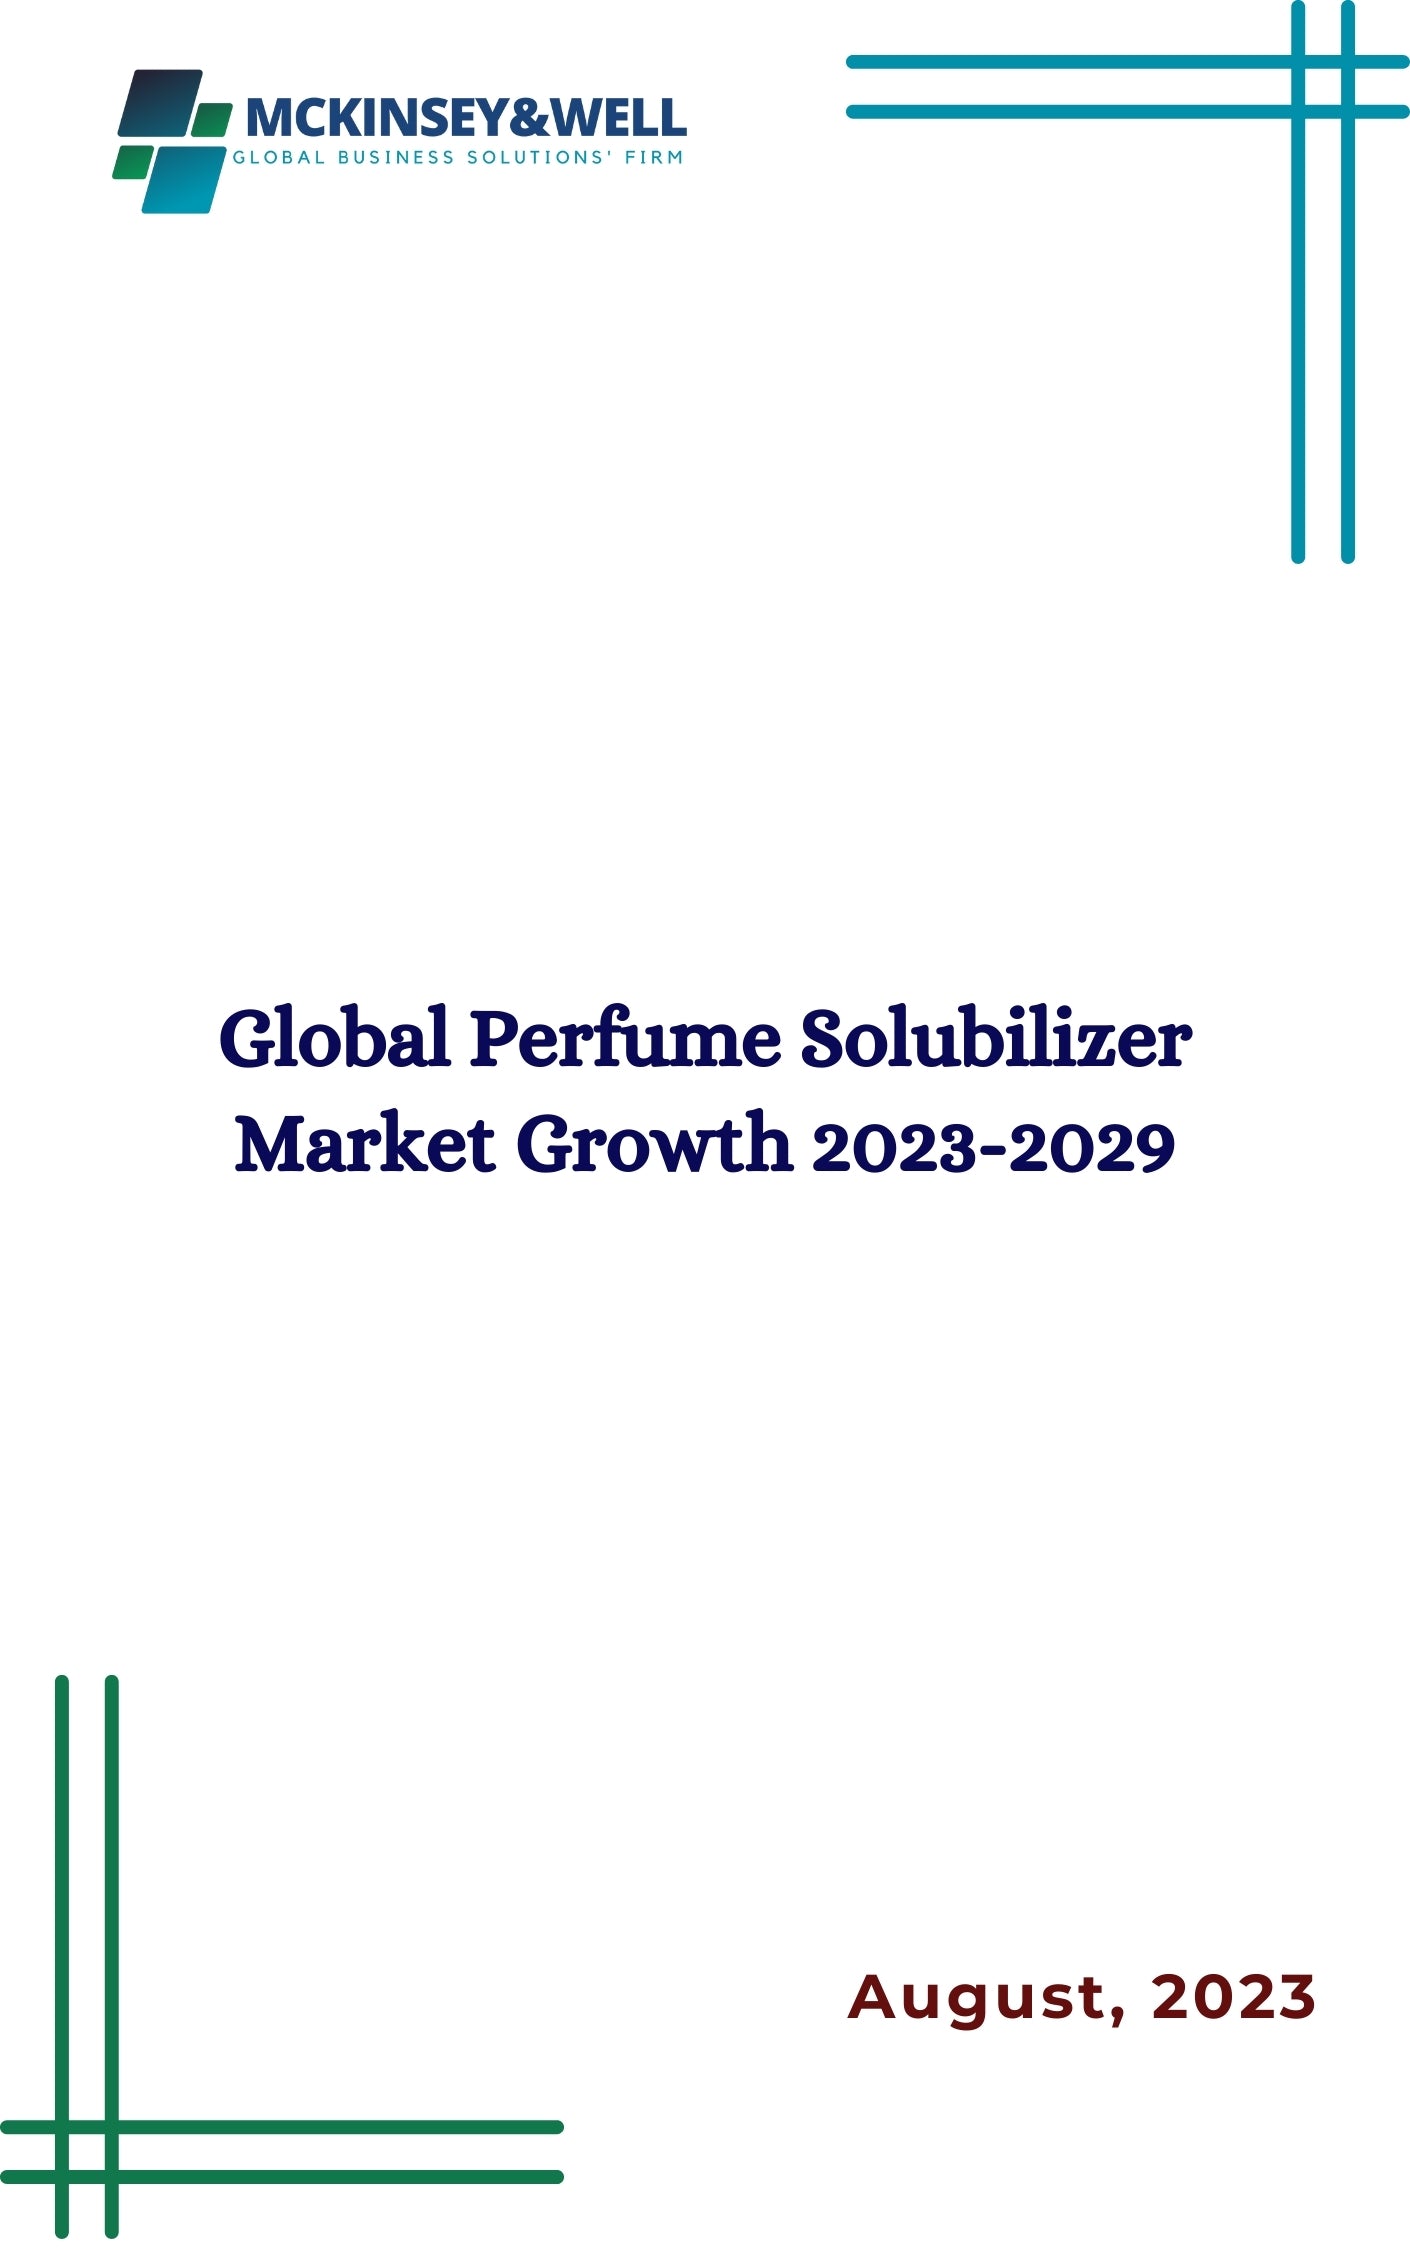 Global Perfume Solubilizer Market Growth 2023-2029